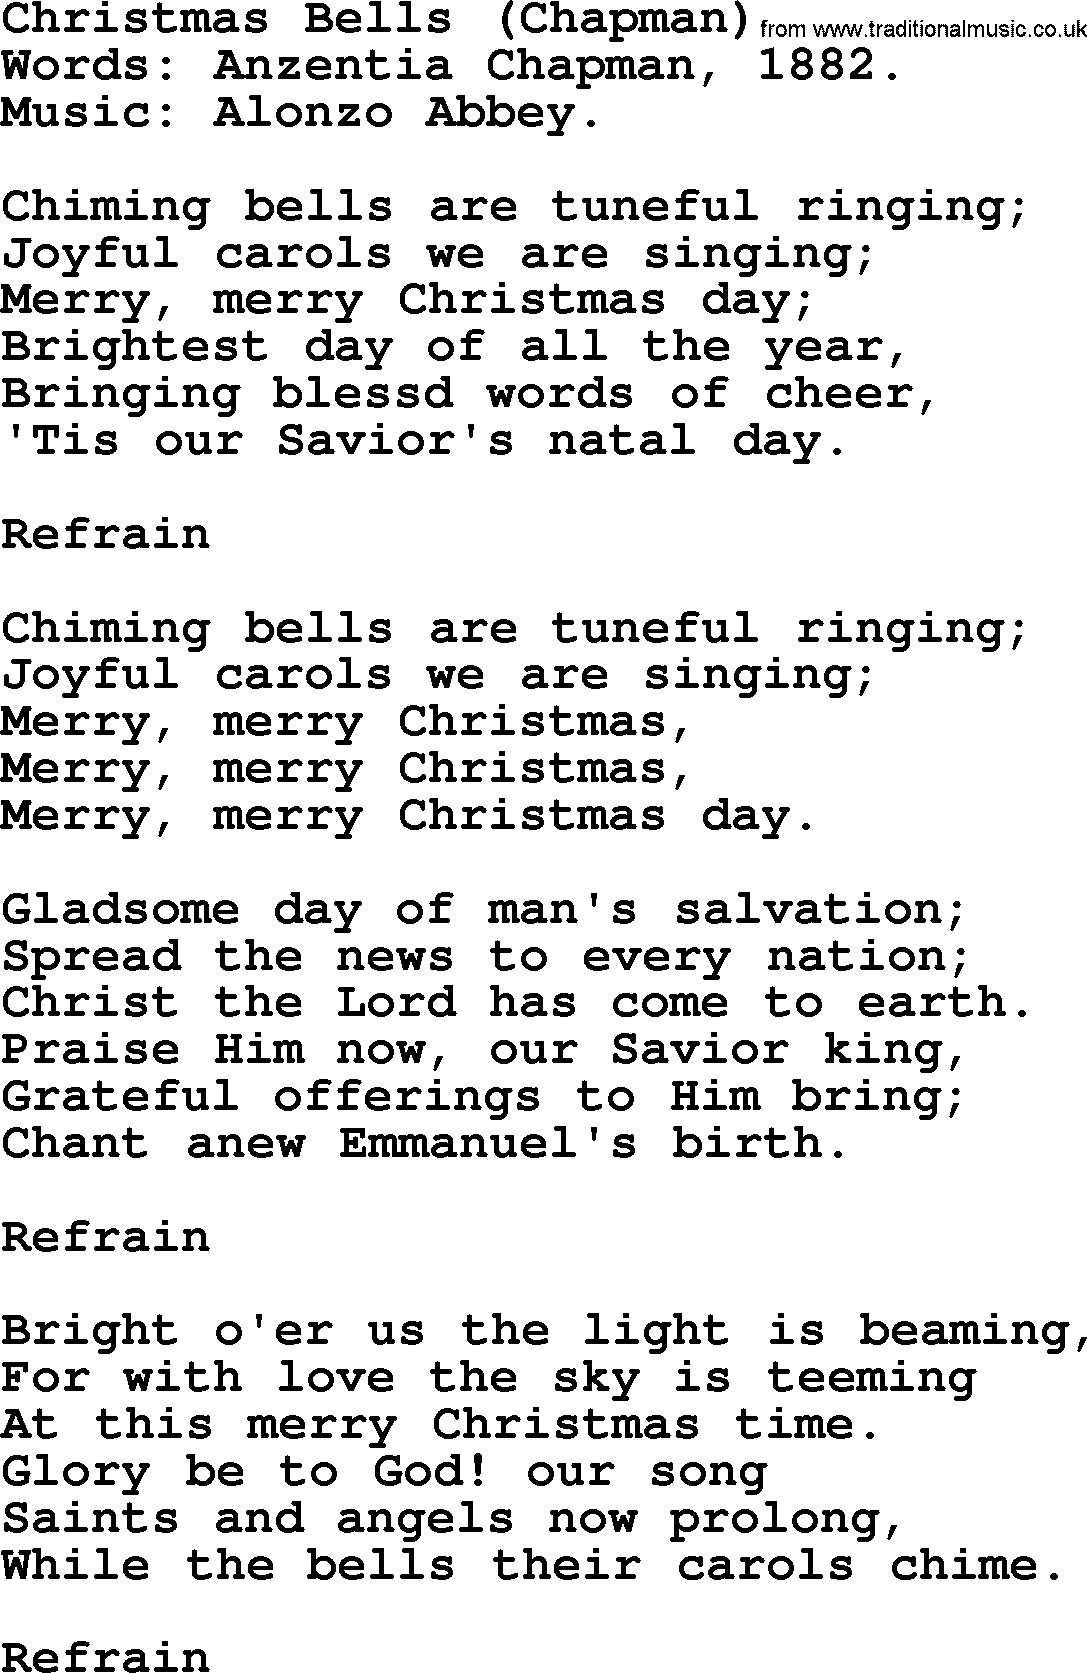 Christmas Hymns, Carols and Songs, title: Christmas Bells (chapman), lyrics with PDF